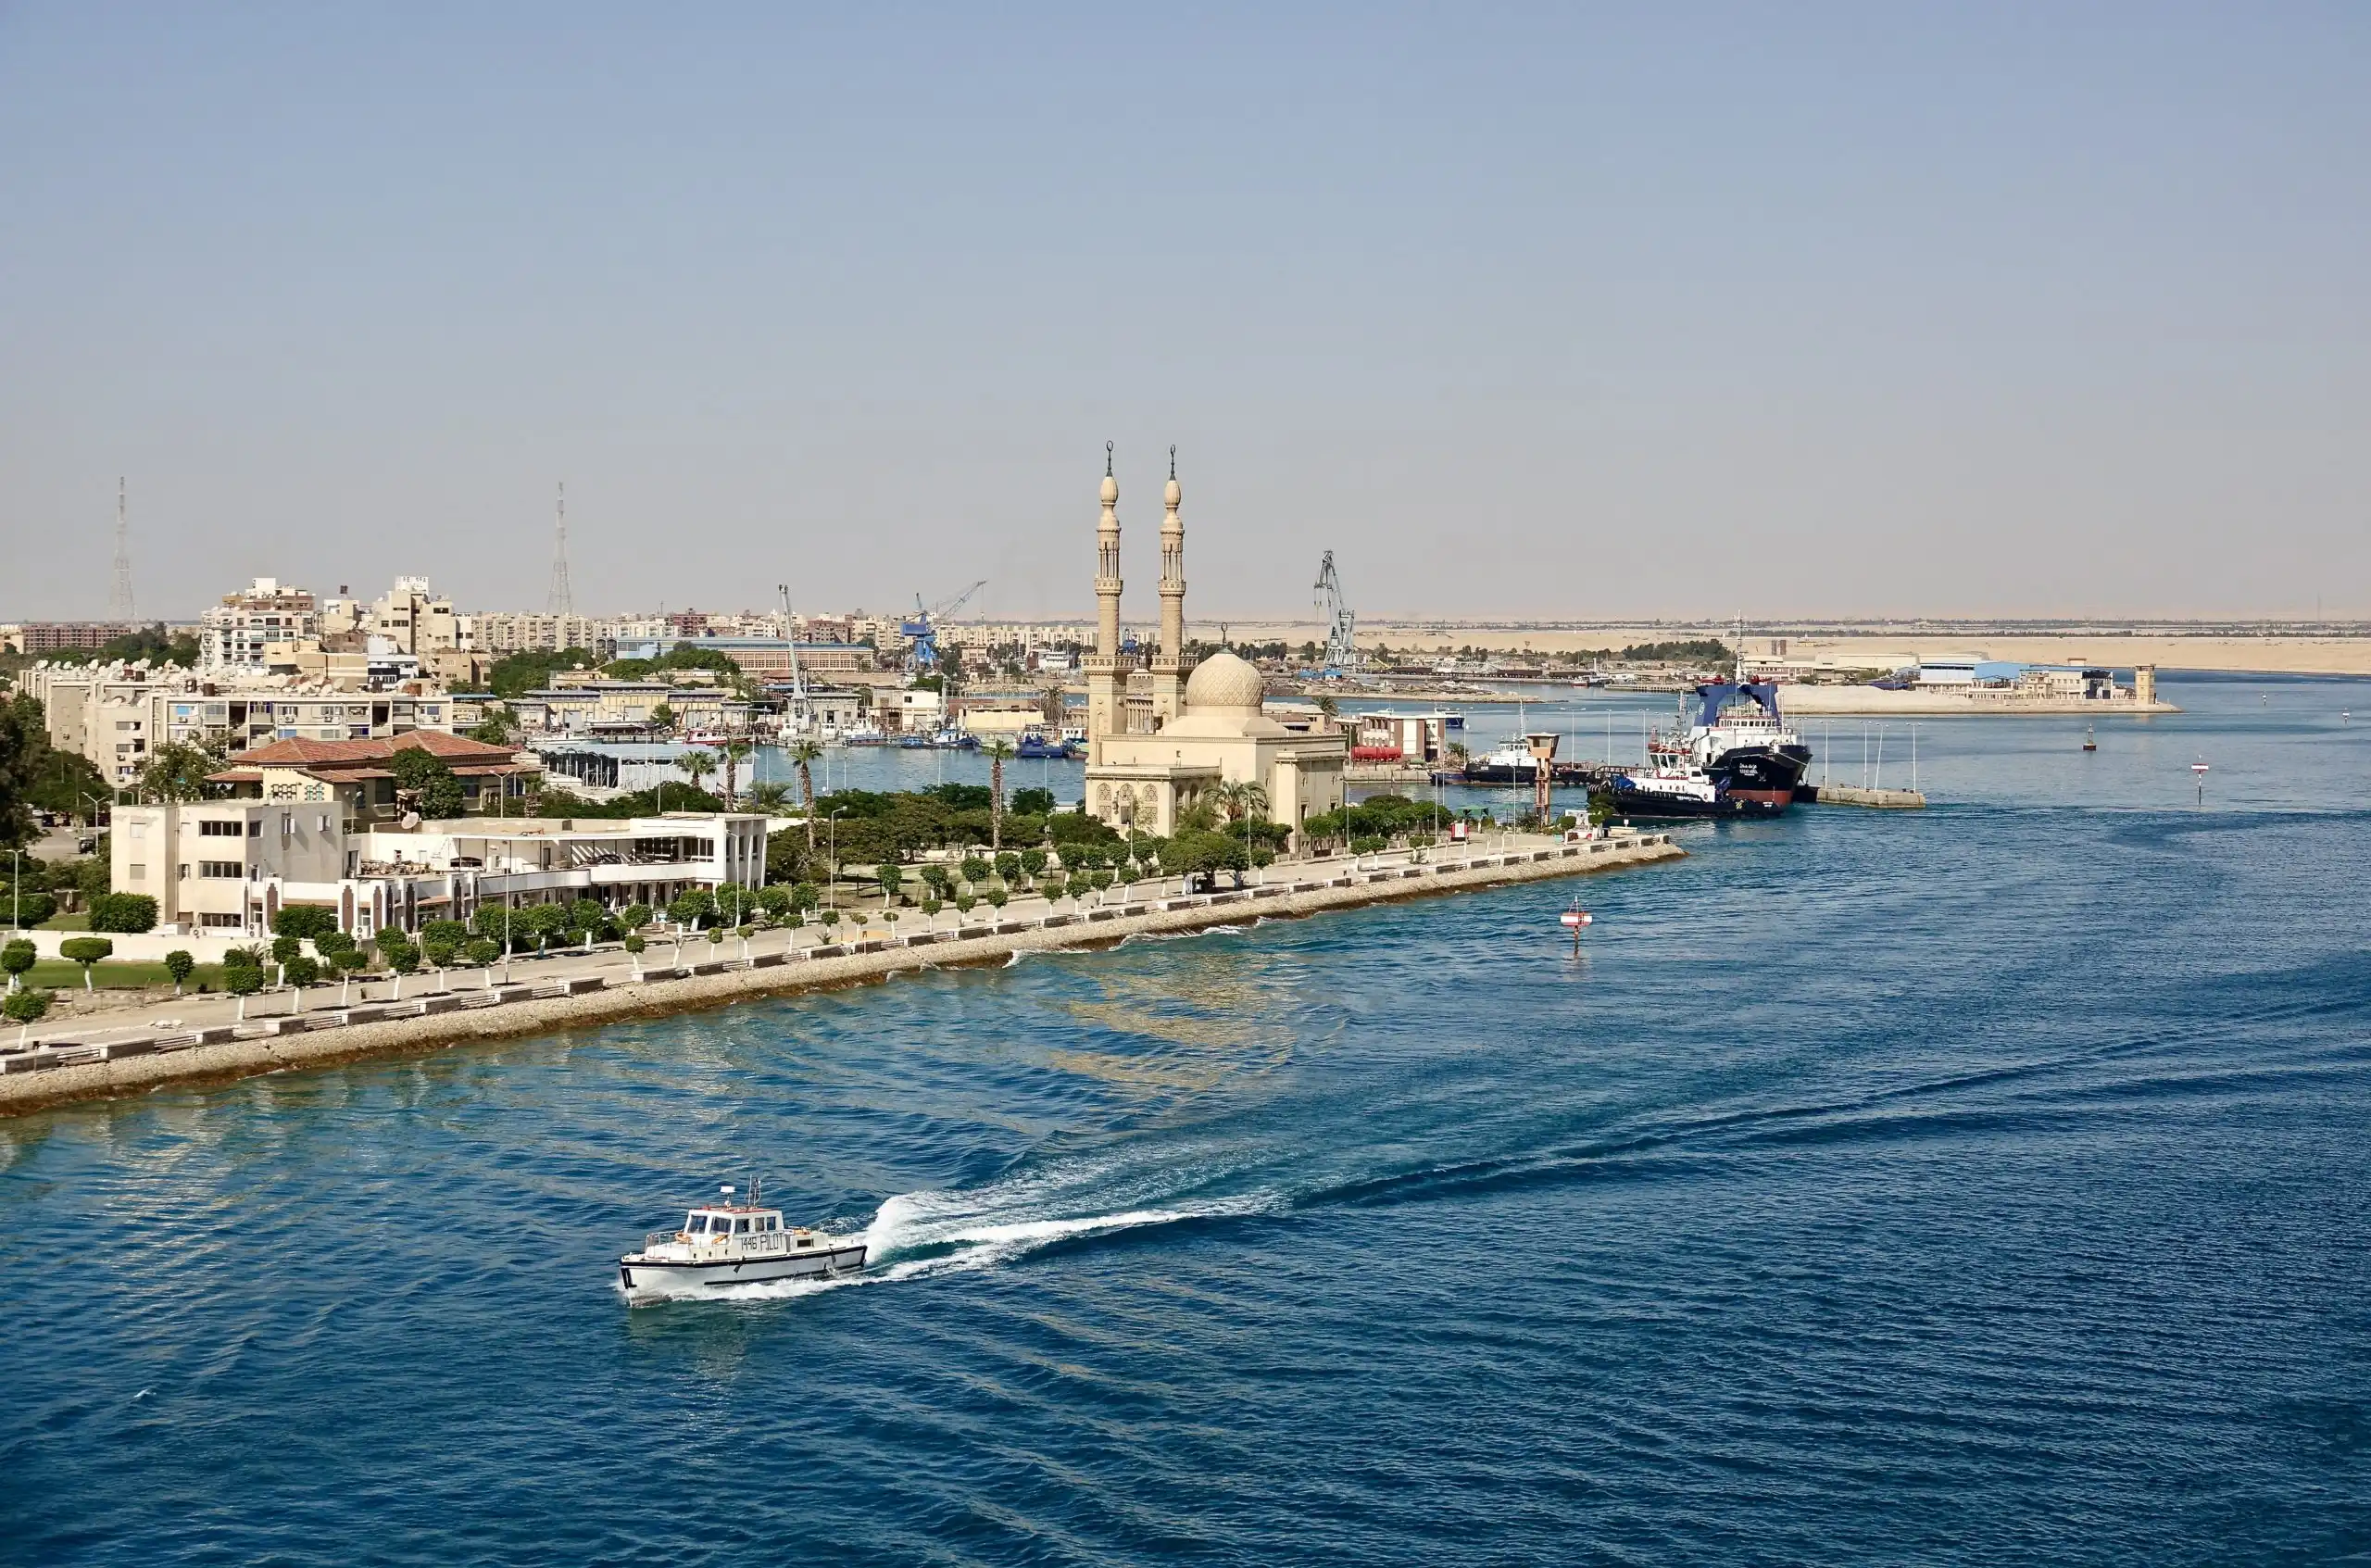 Suez tourism